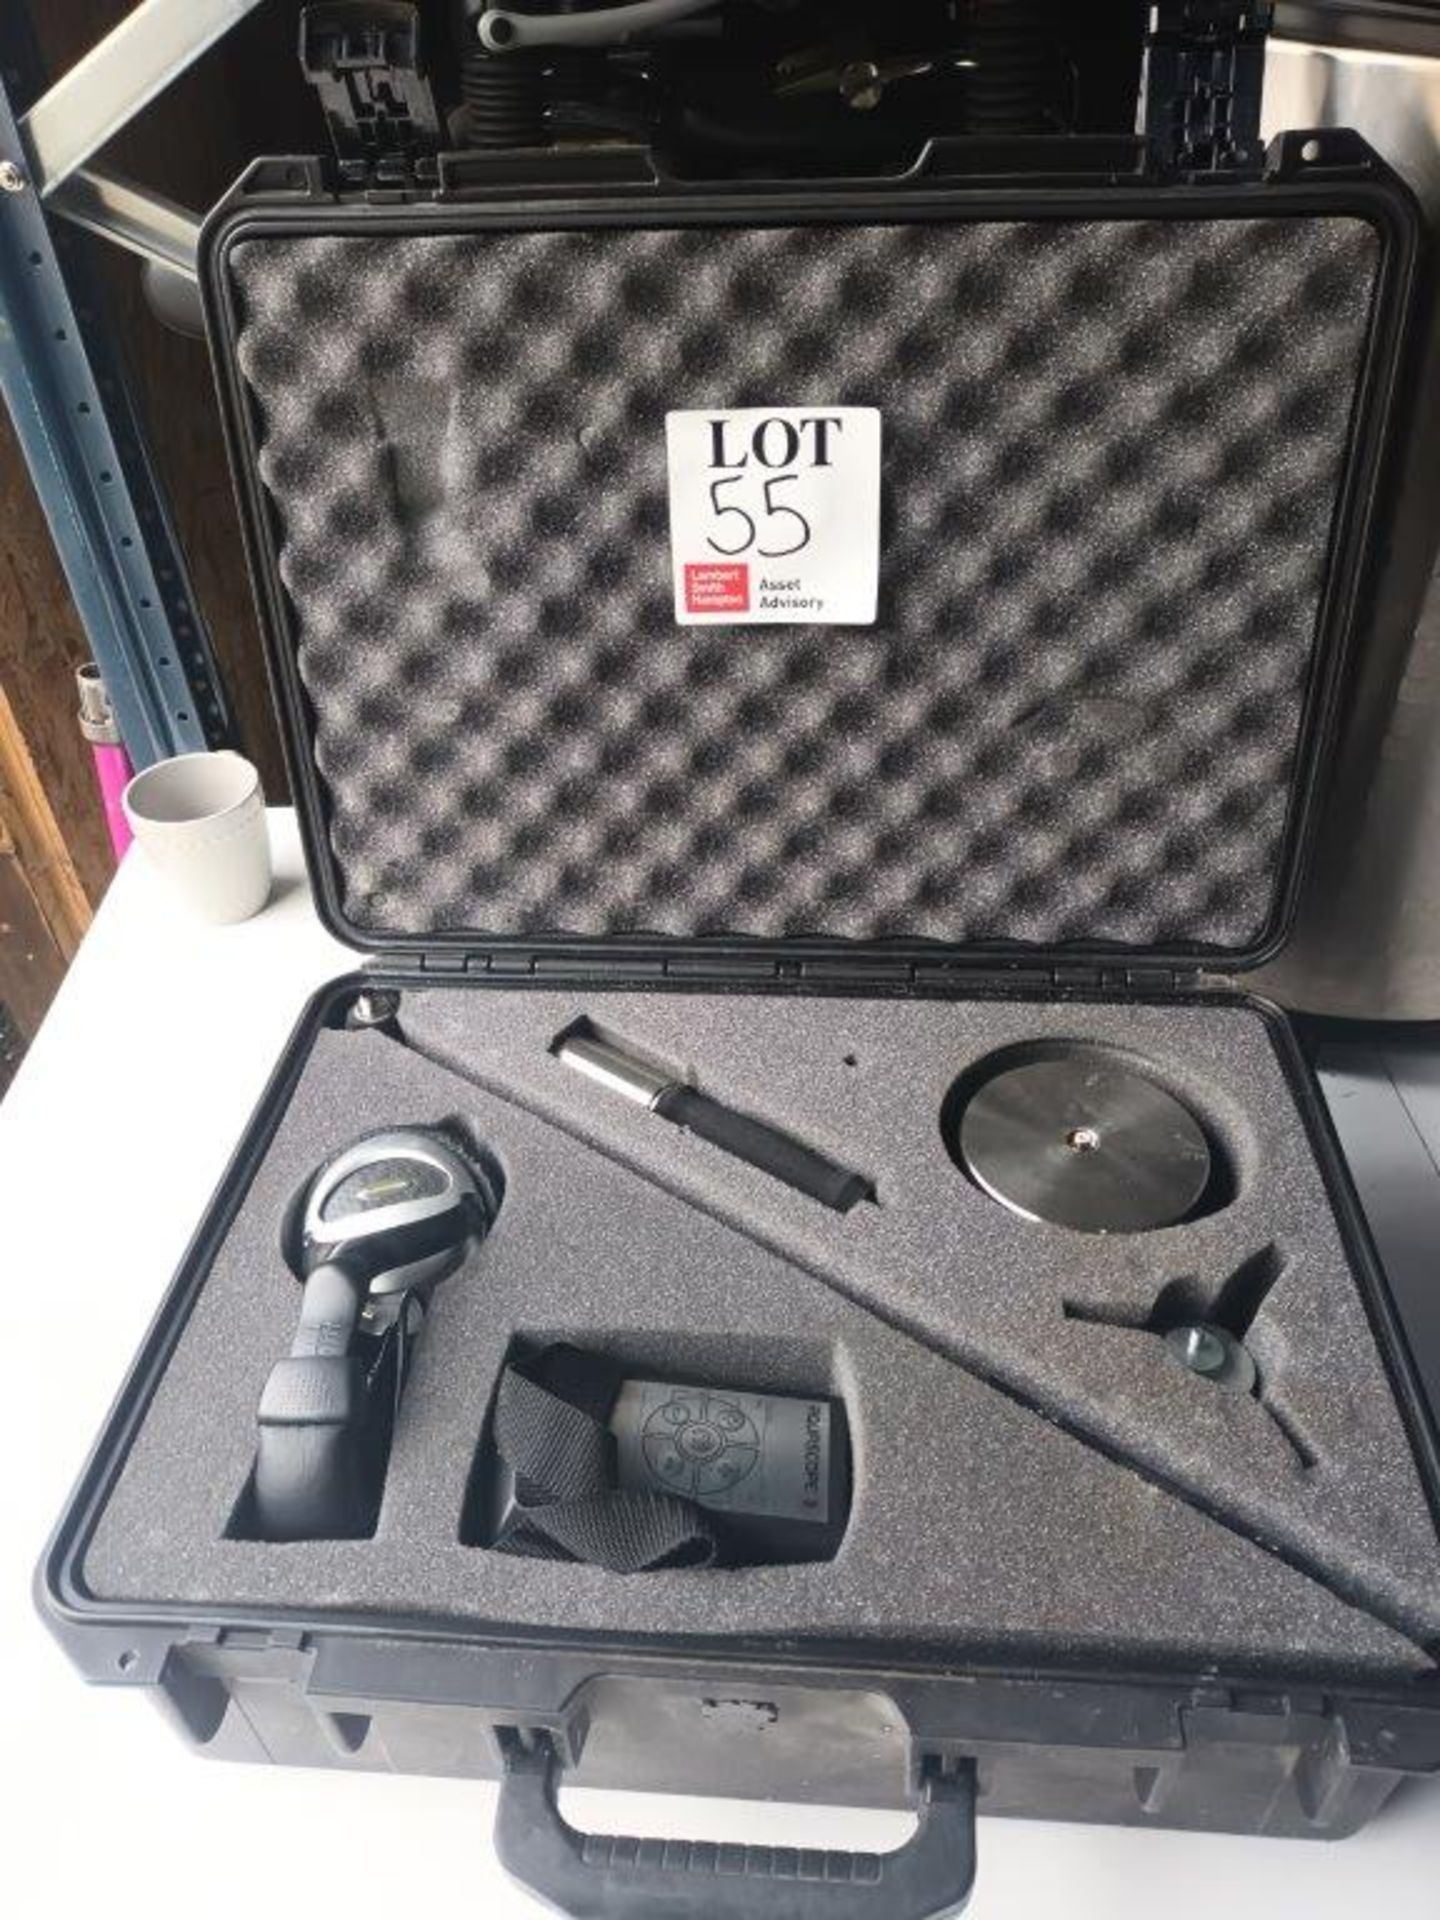 Gutermann Aquascope 3 leak kit